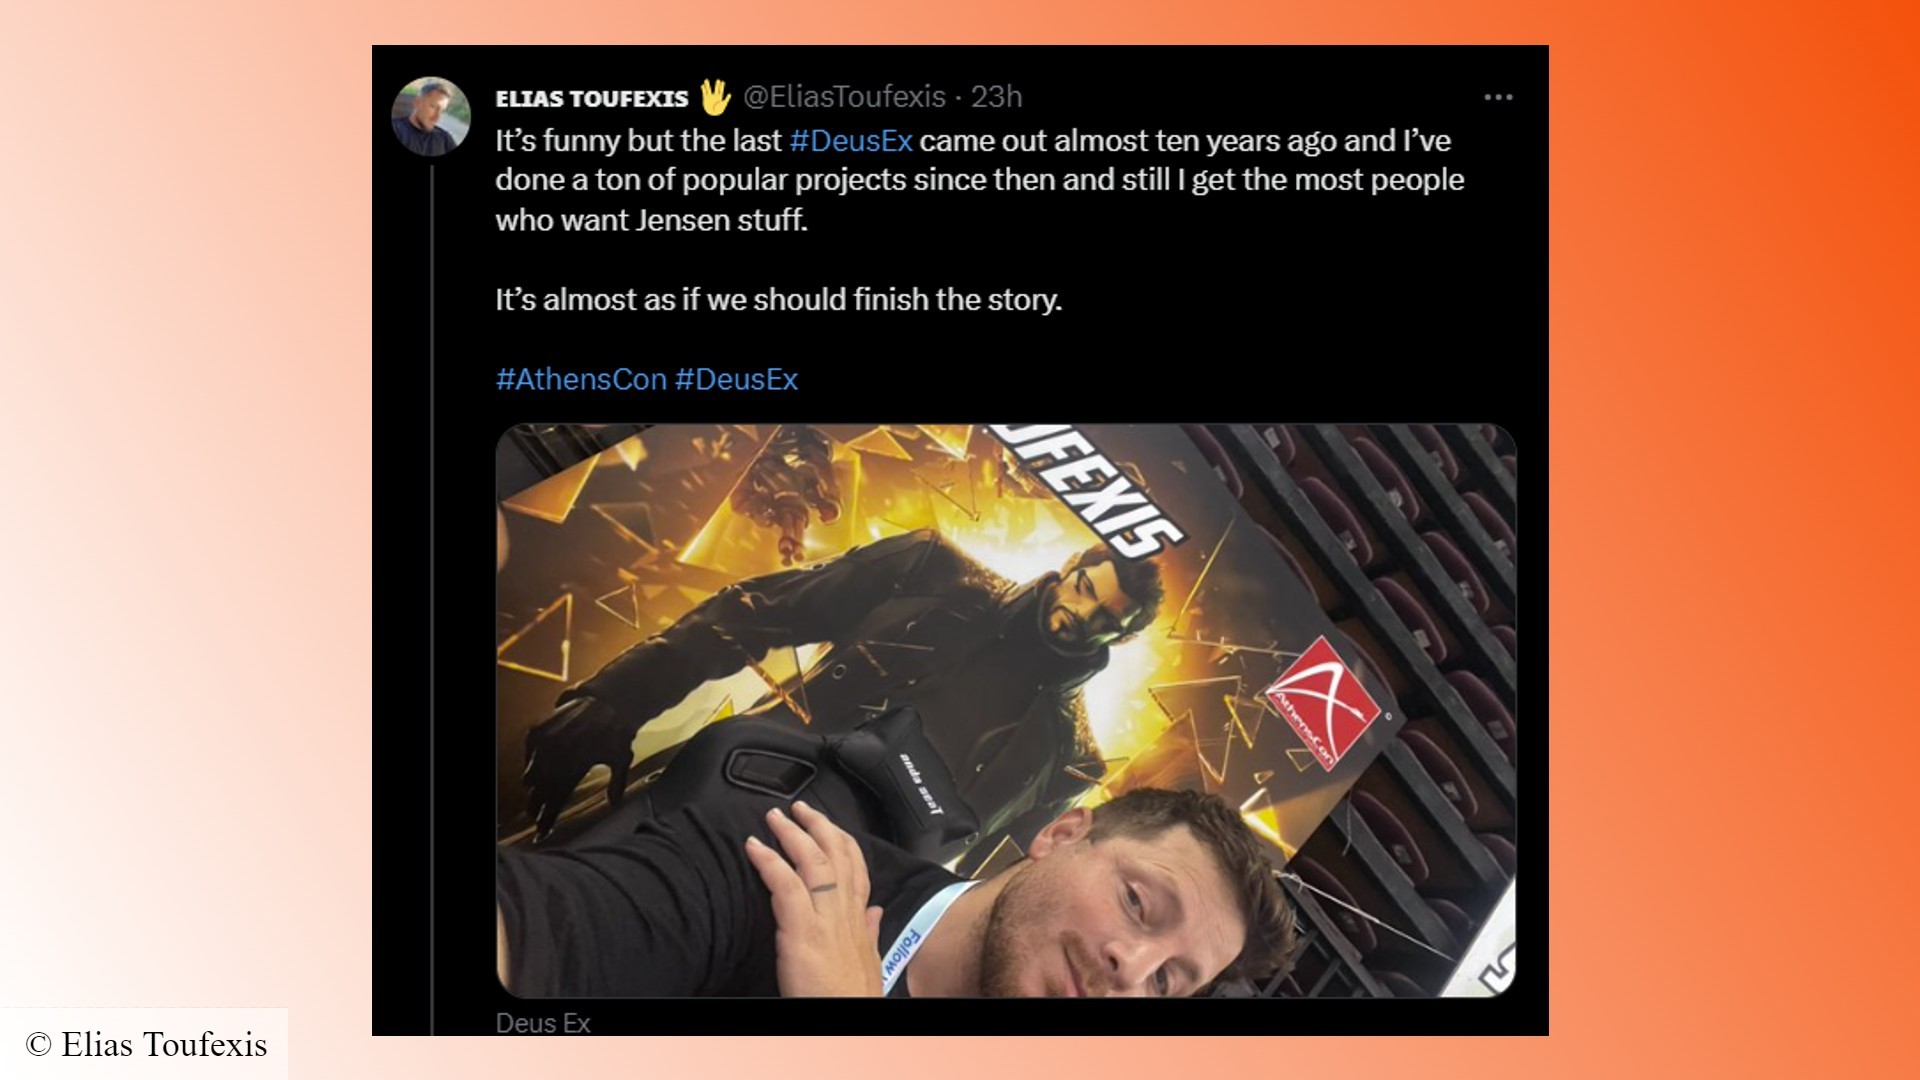 New Deus Ex game: A tweet from Elias Toufexis, voice actor for Adam Jensen in Deus Ex